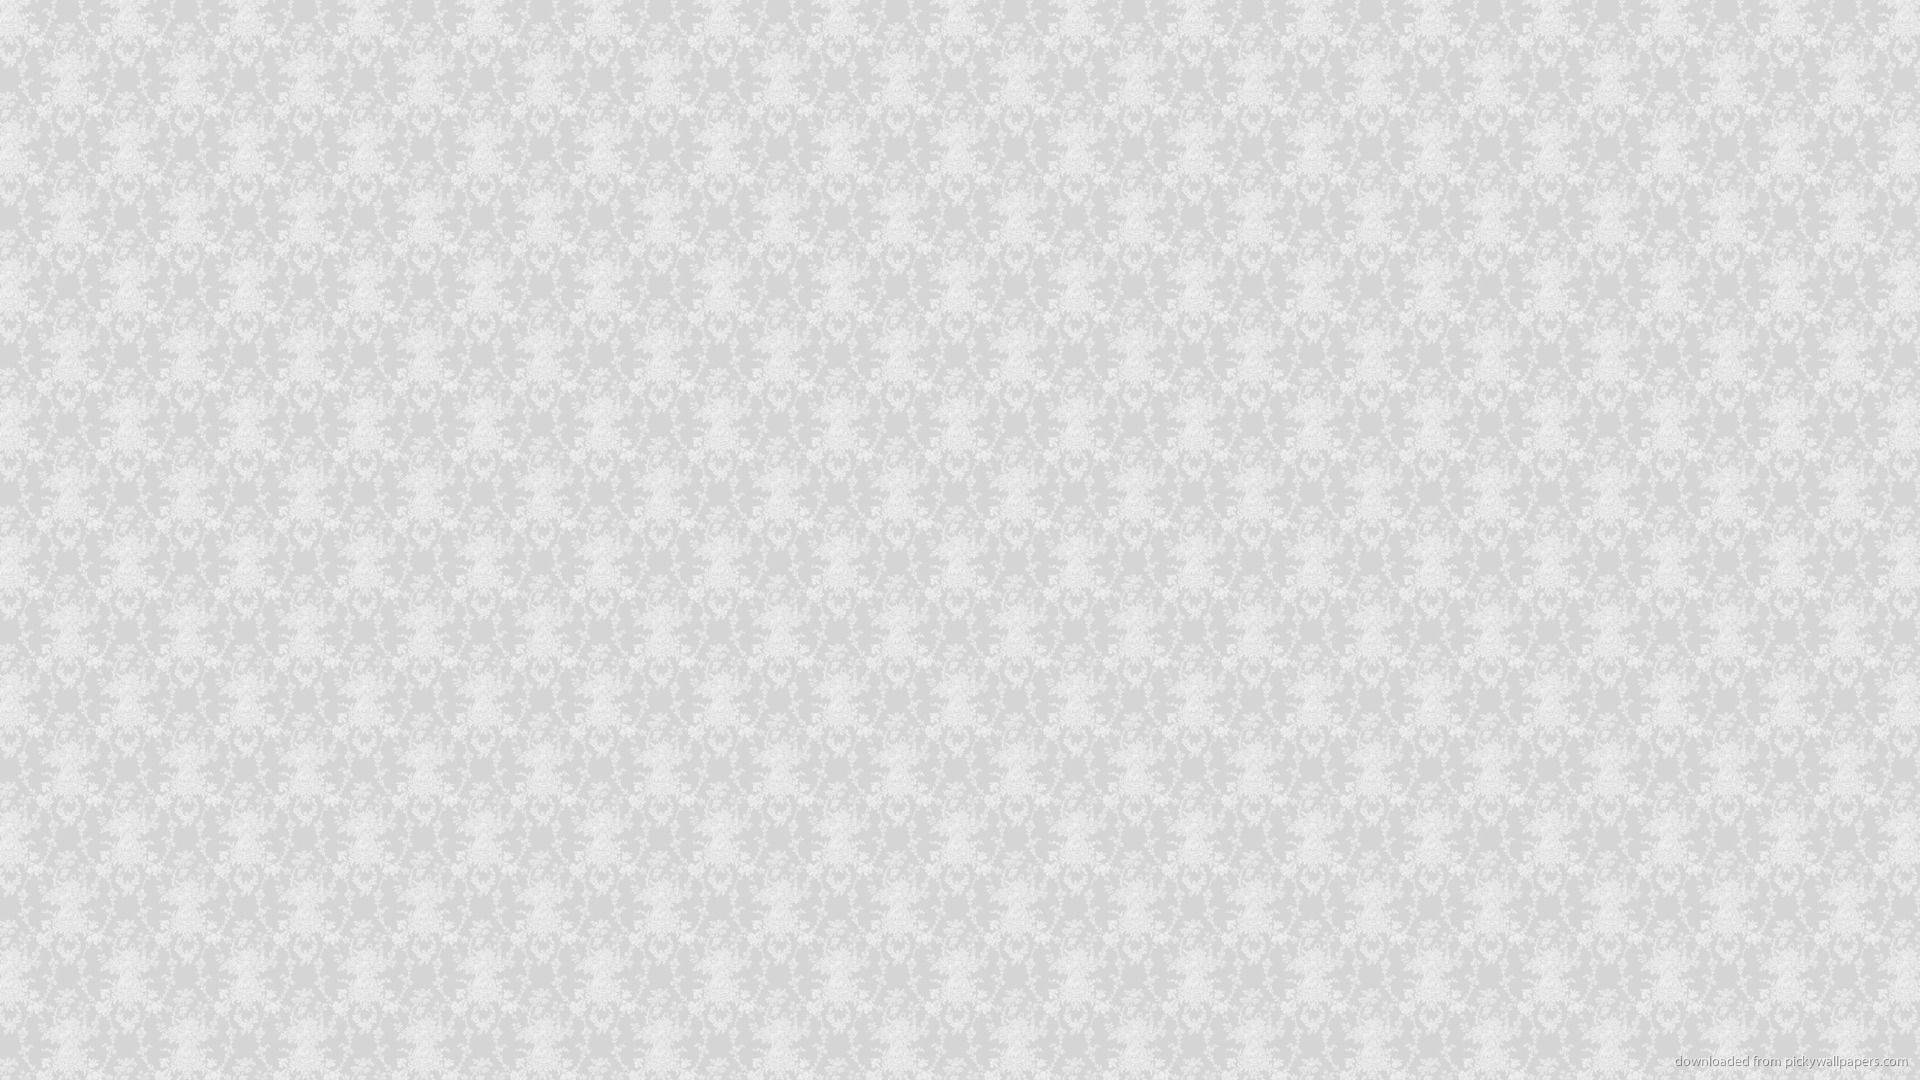 Free Light Gray Wallpaper Downloads, [100+] Light Gray Wallpapers for FREE  